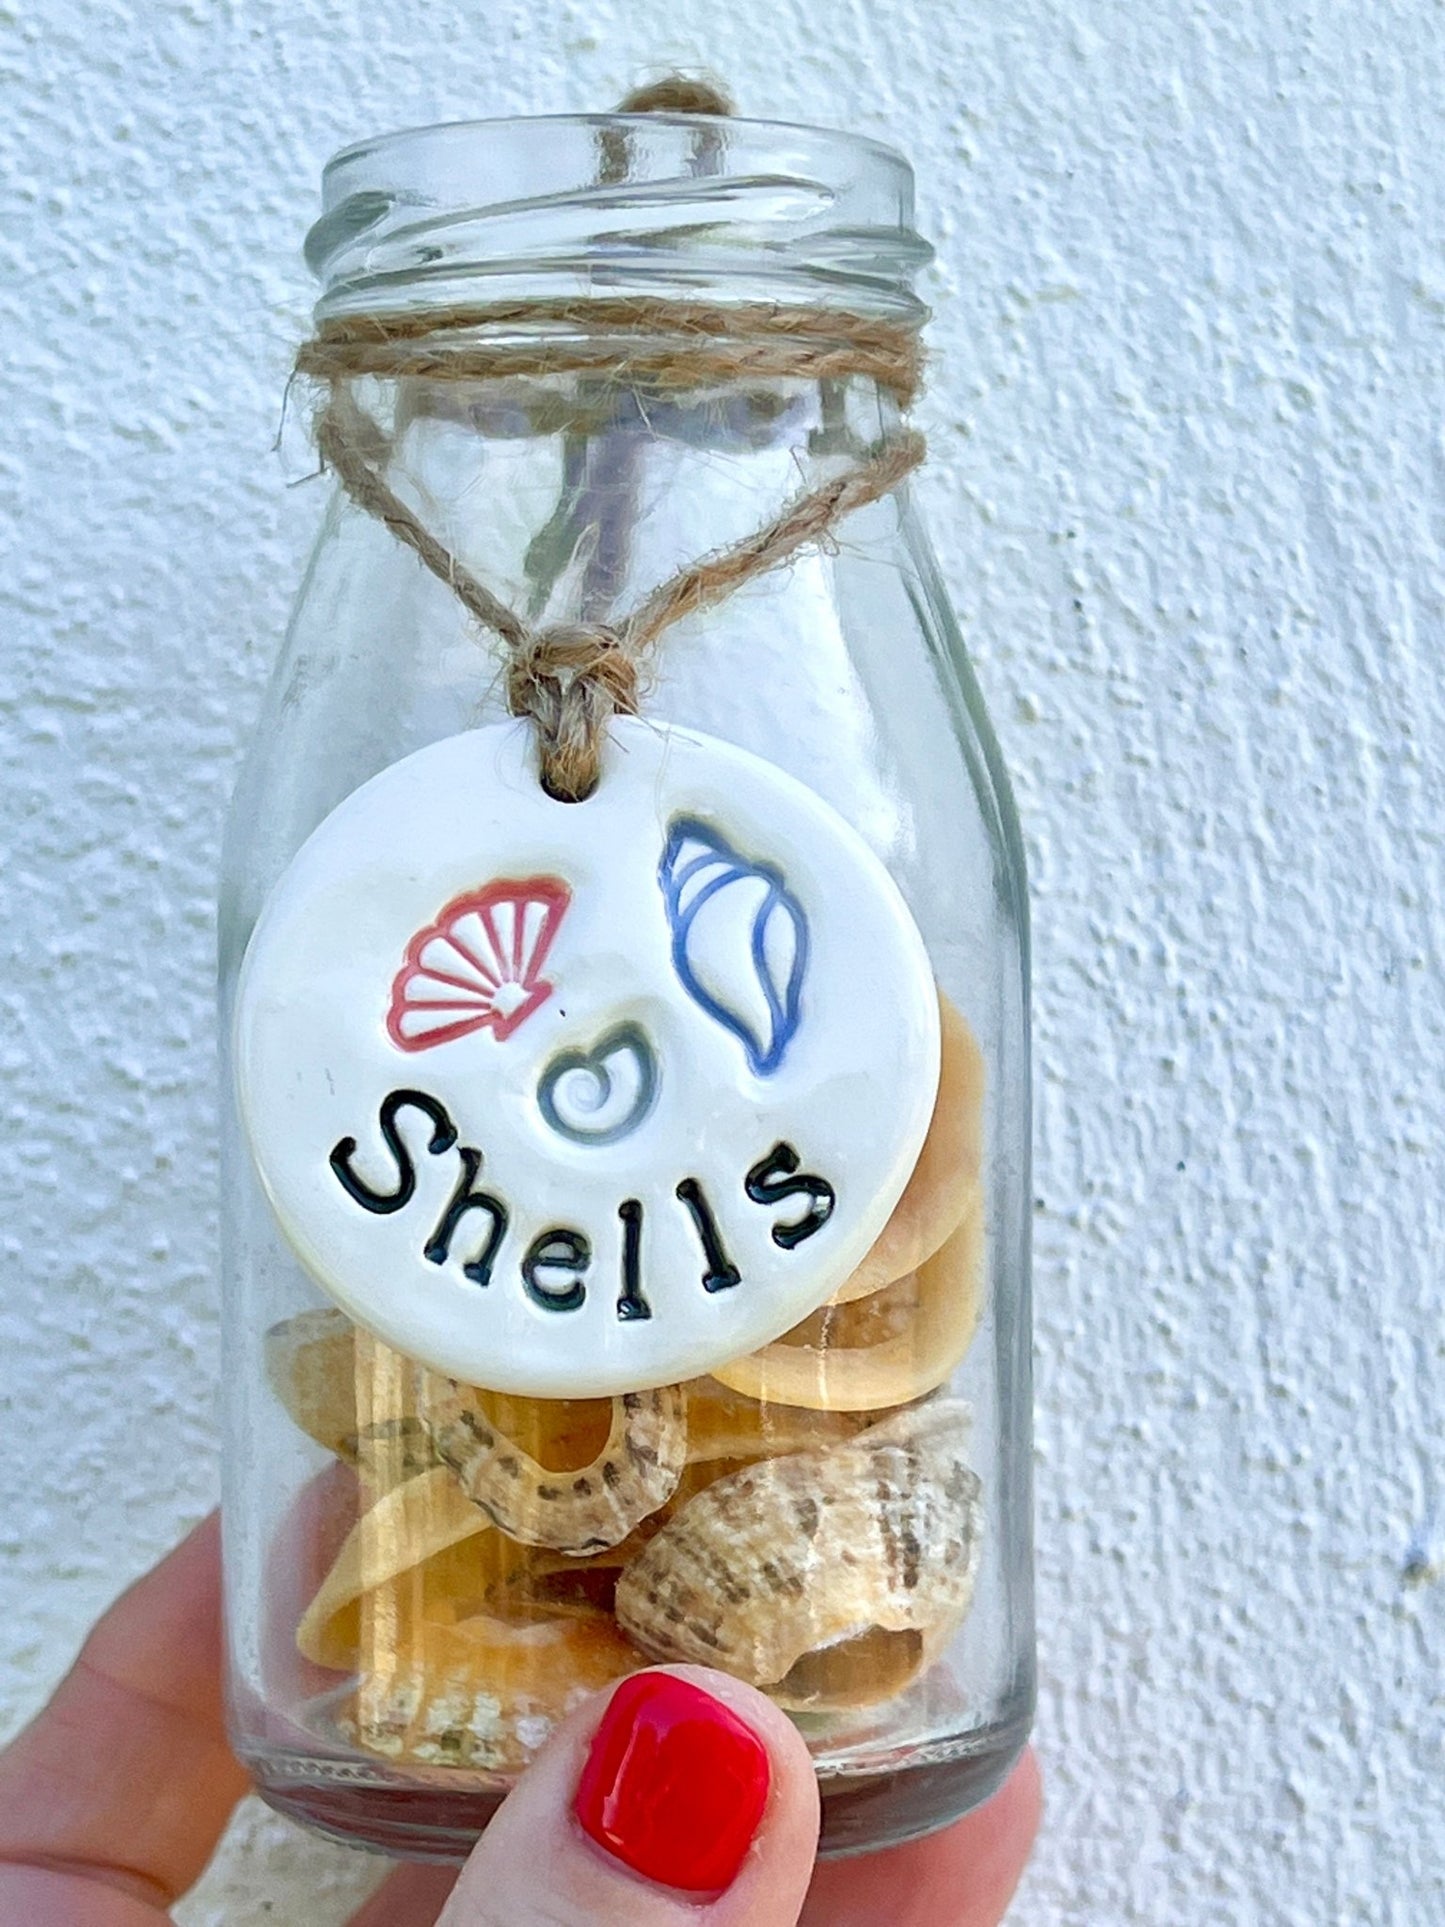 Seaglass, Shells, Hot Choc Ceramic Tag - Readymoney Beach Shop